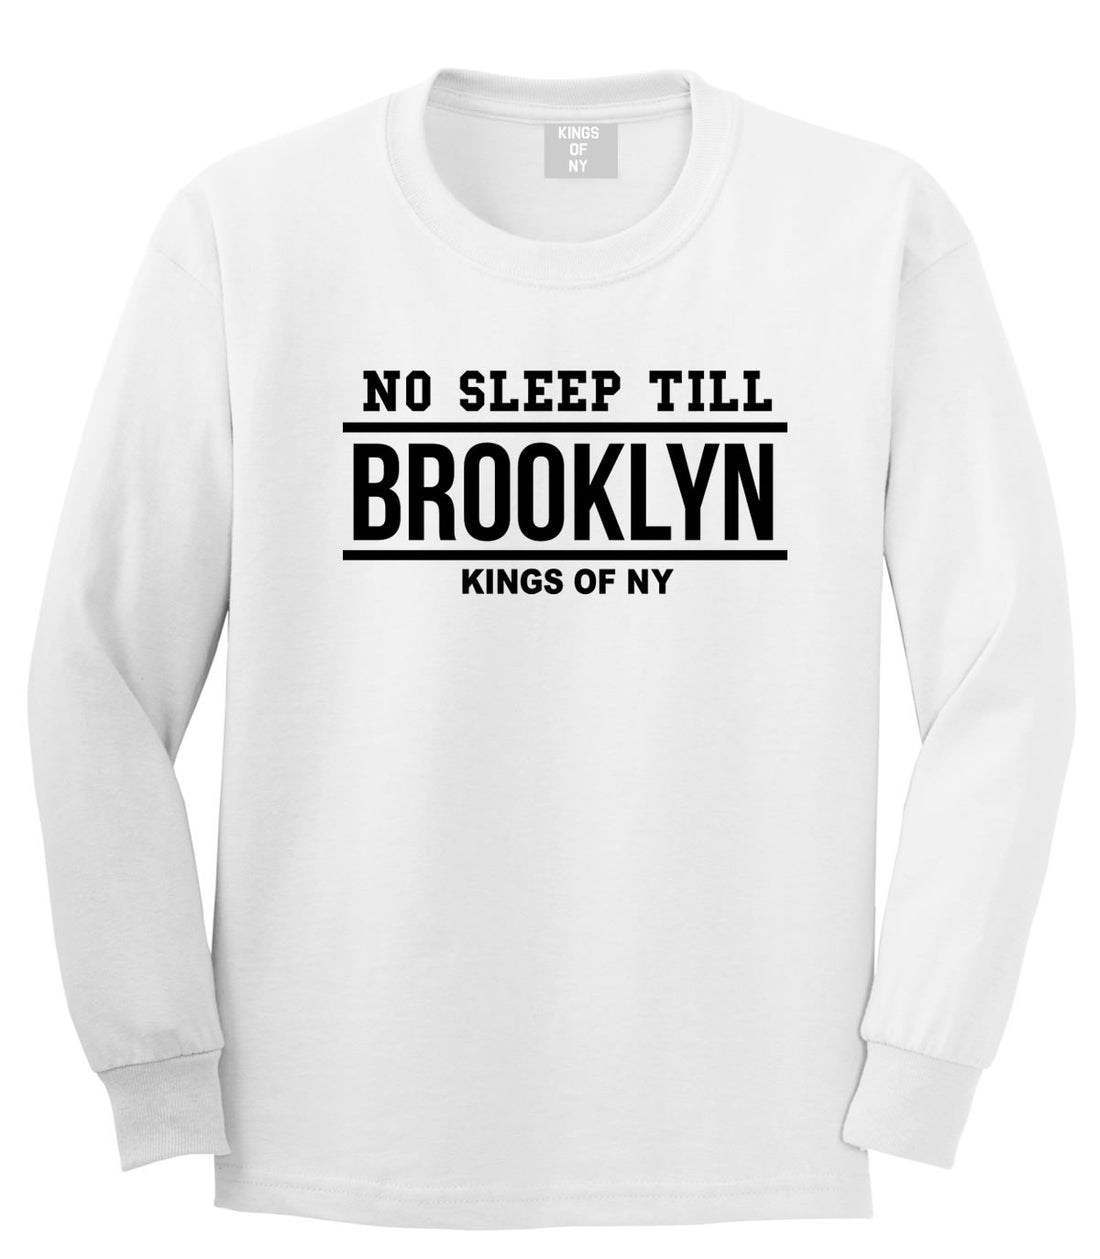 No Sleep Till Brooklyn Long Sleeve T-Shirt in White by Kings Of NY